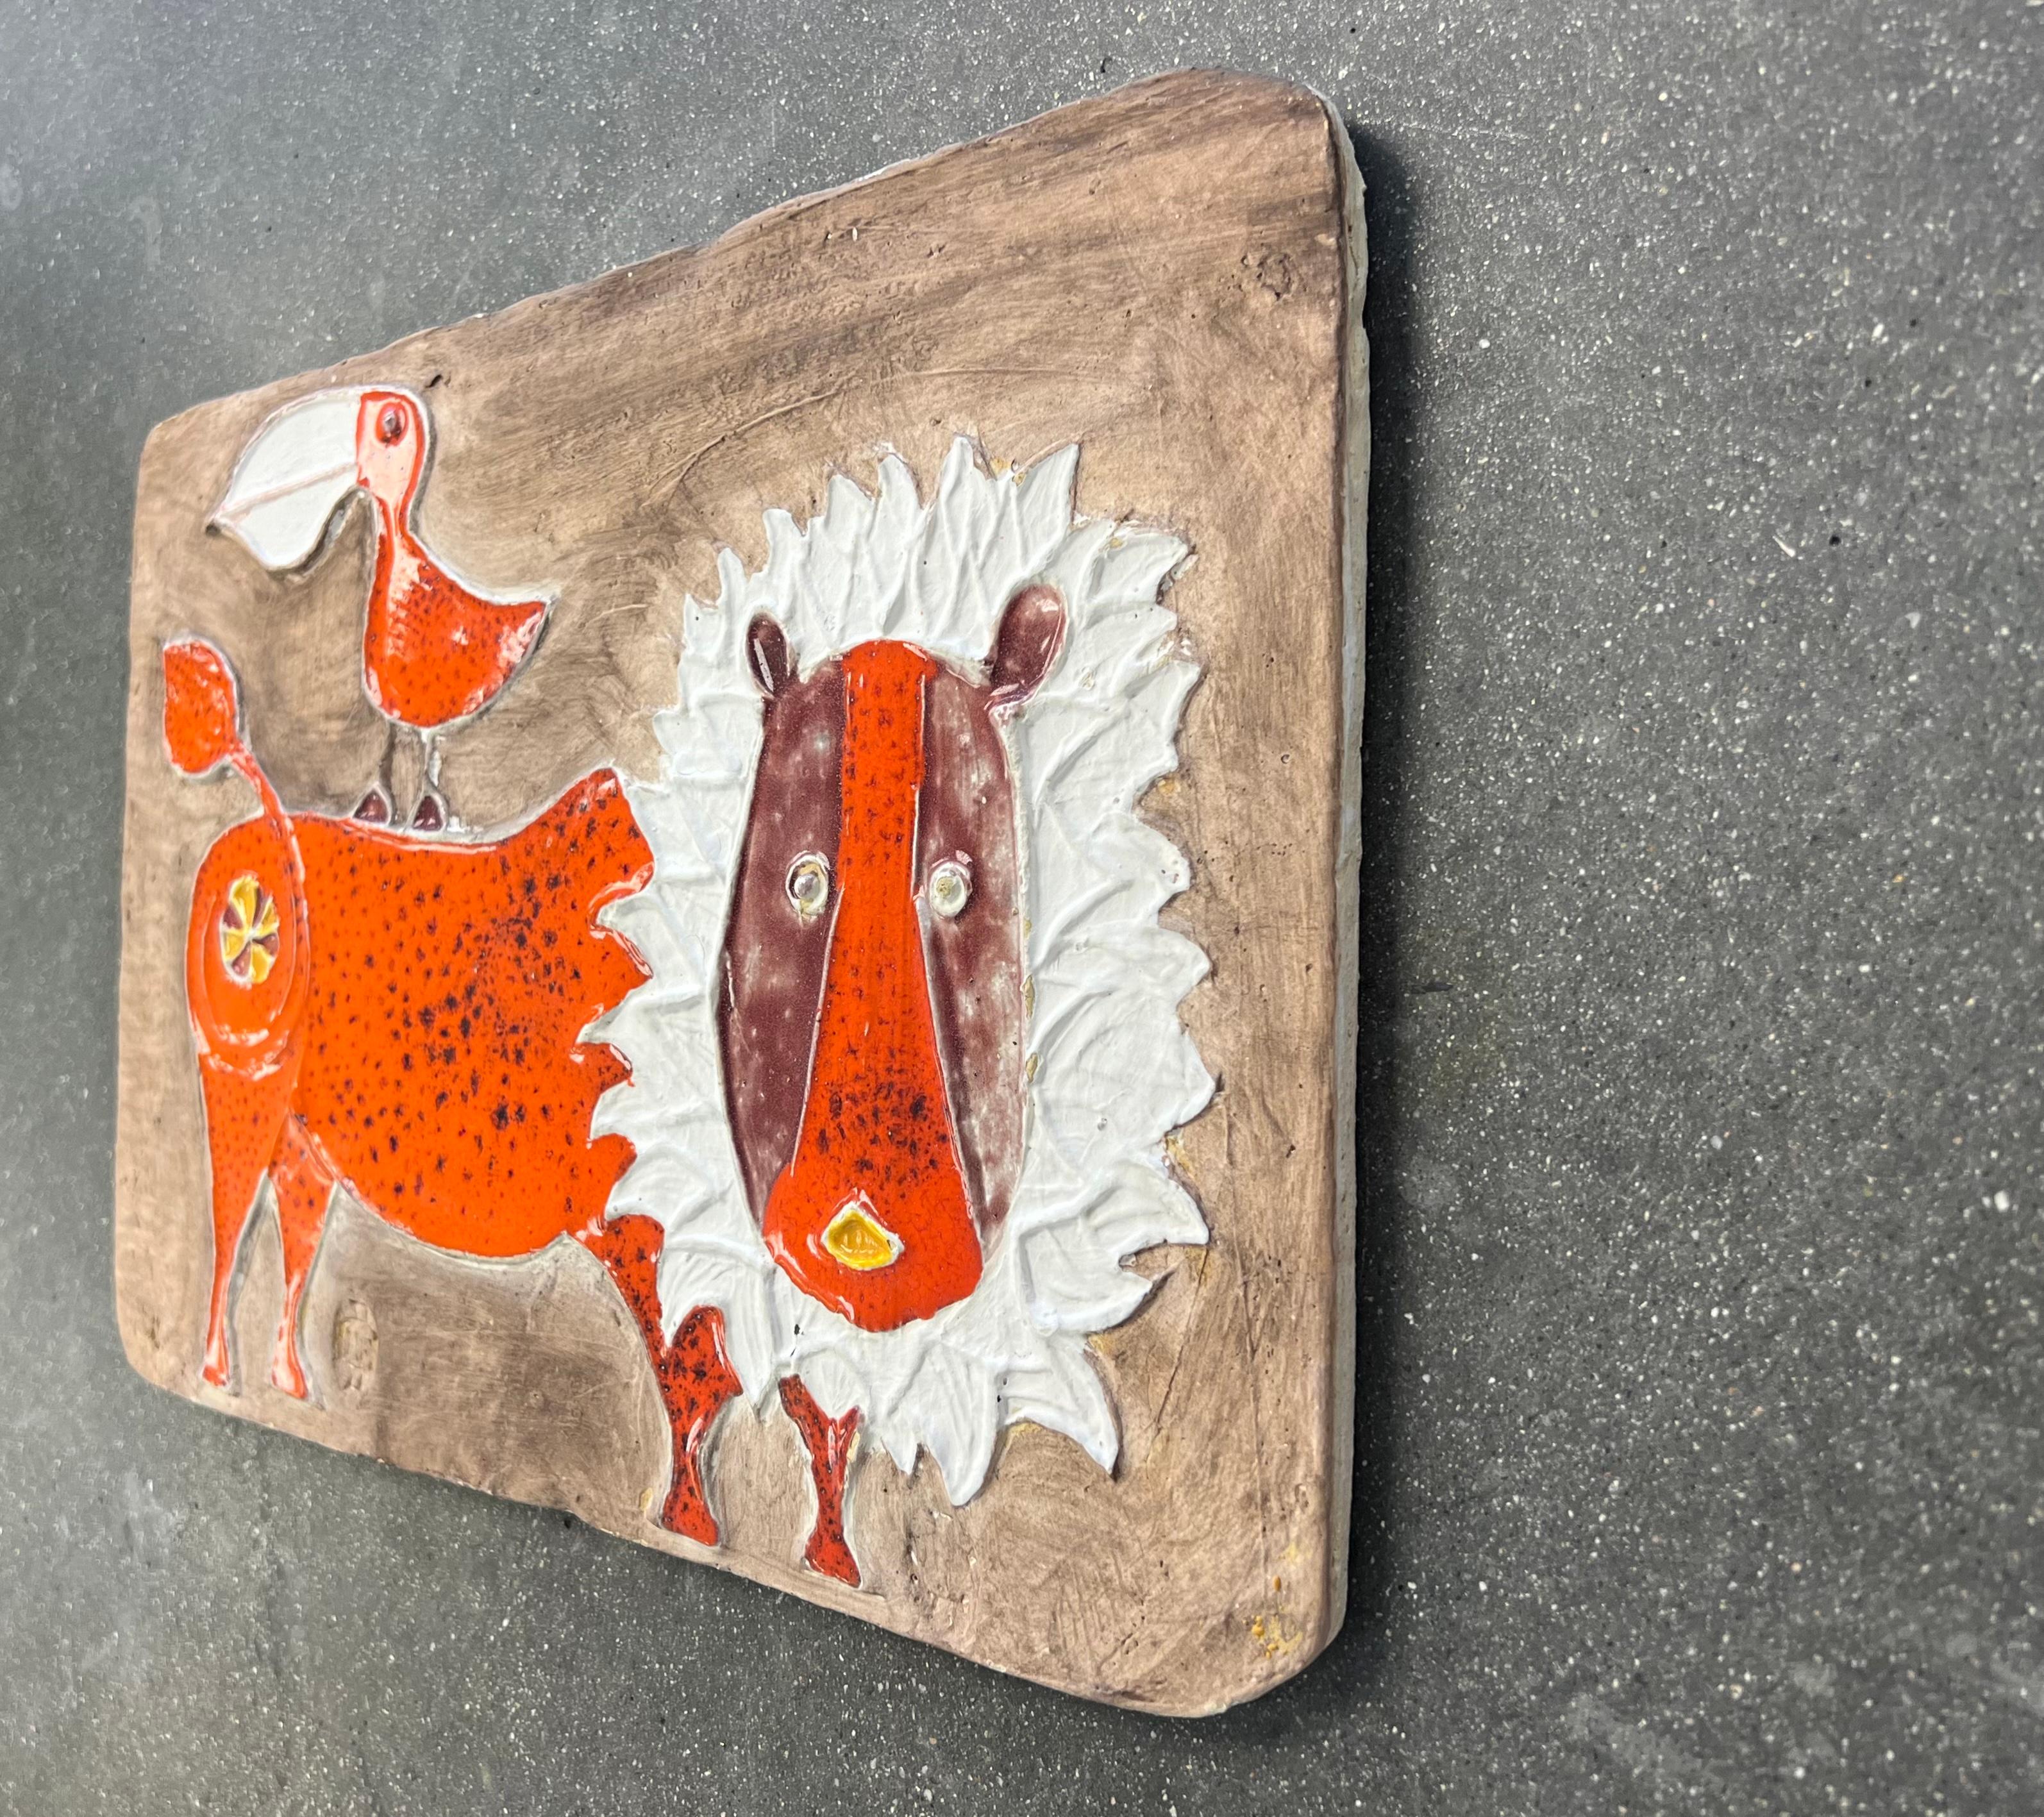 American Orange Ceramic Lion with Bird Plaque Art by Bertil Vallien 